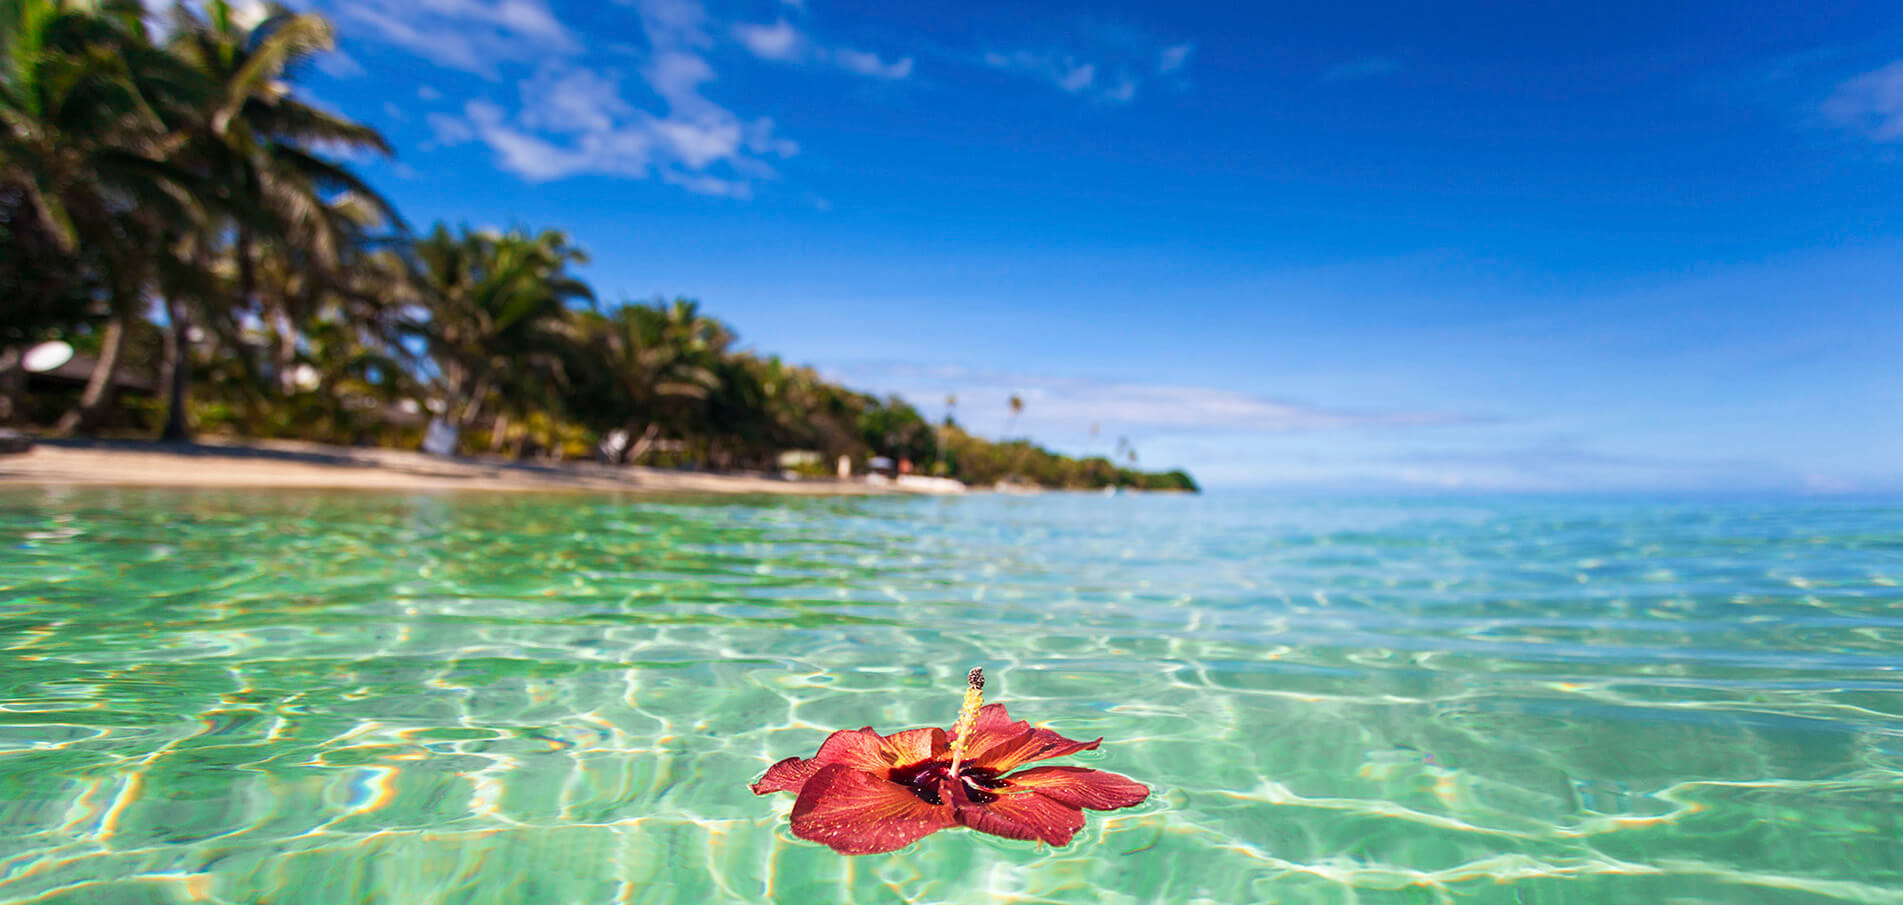 Location de yacht de luxe Fidji - WorldWideLuxuryYacht